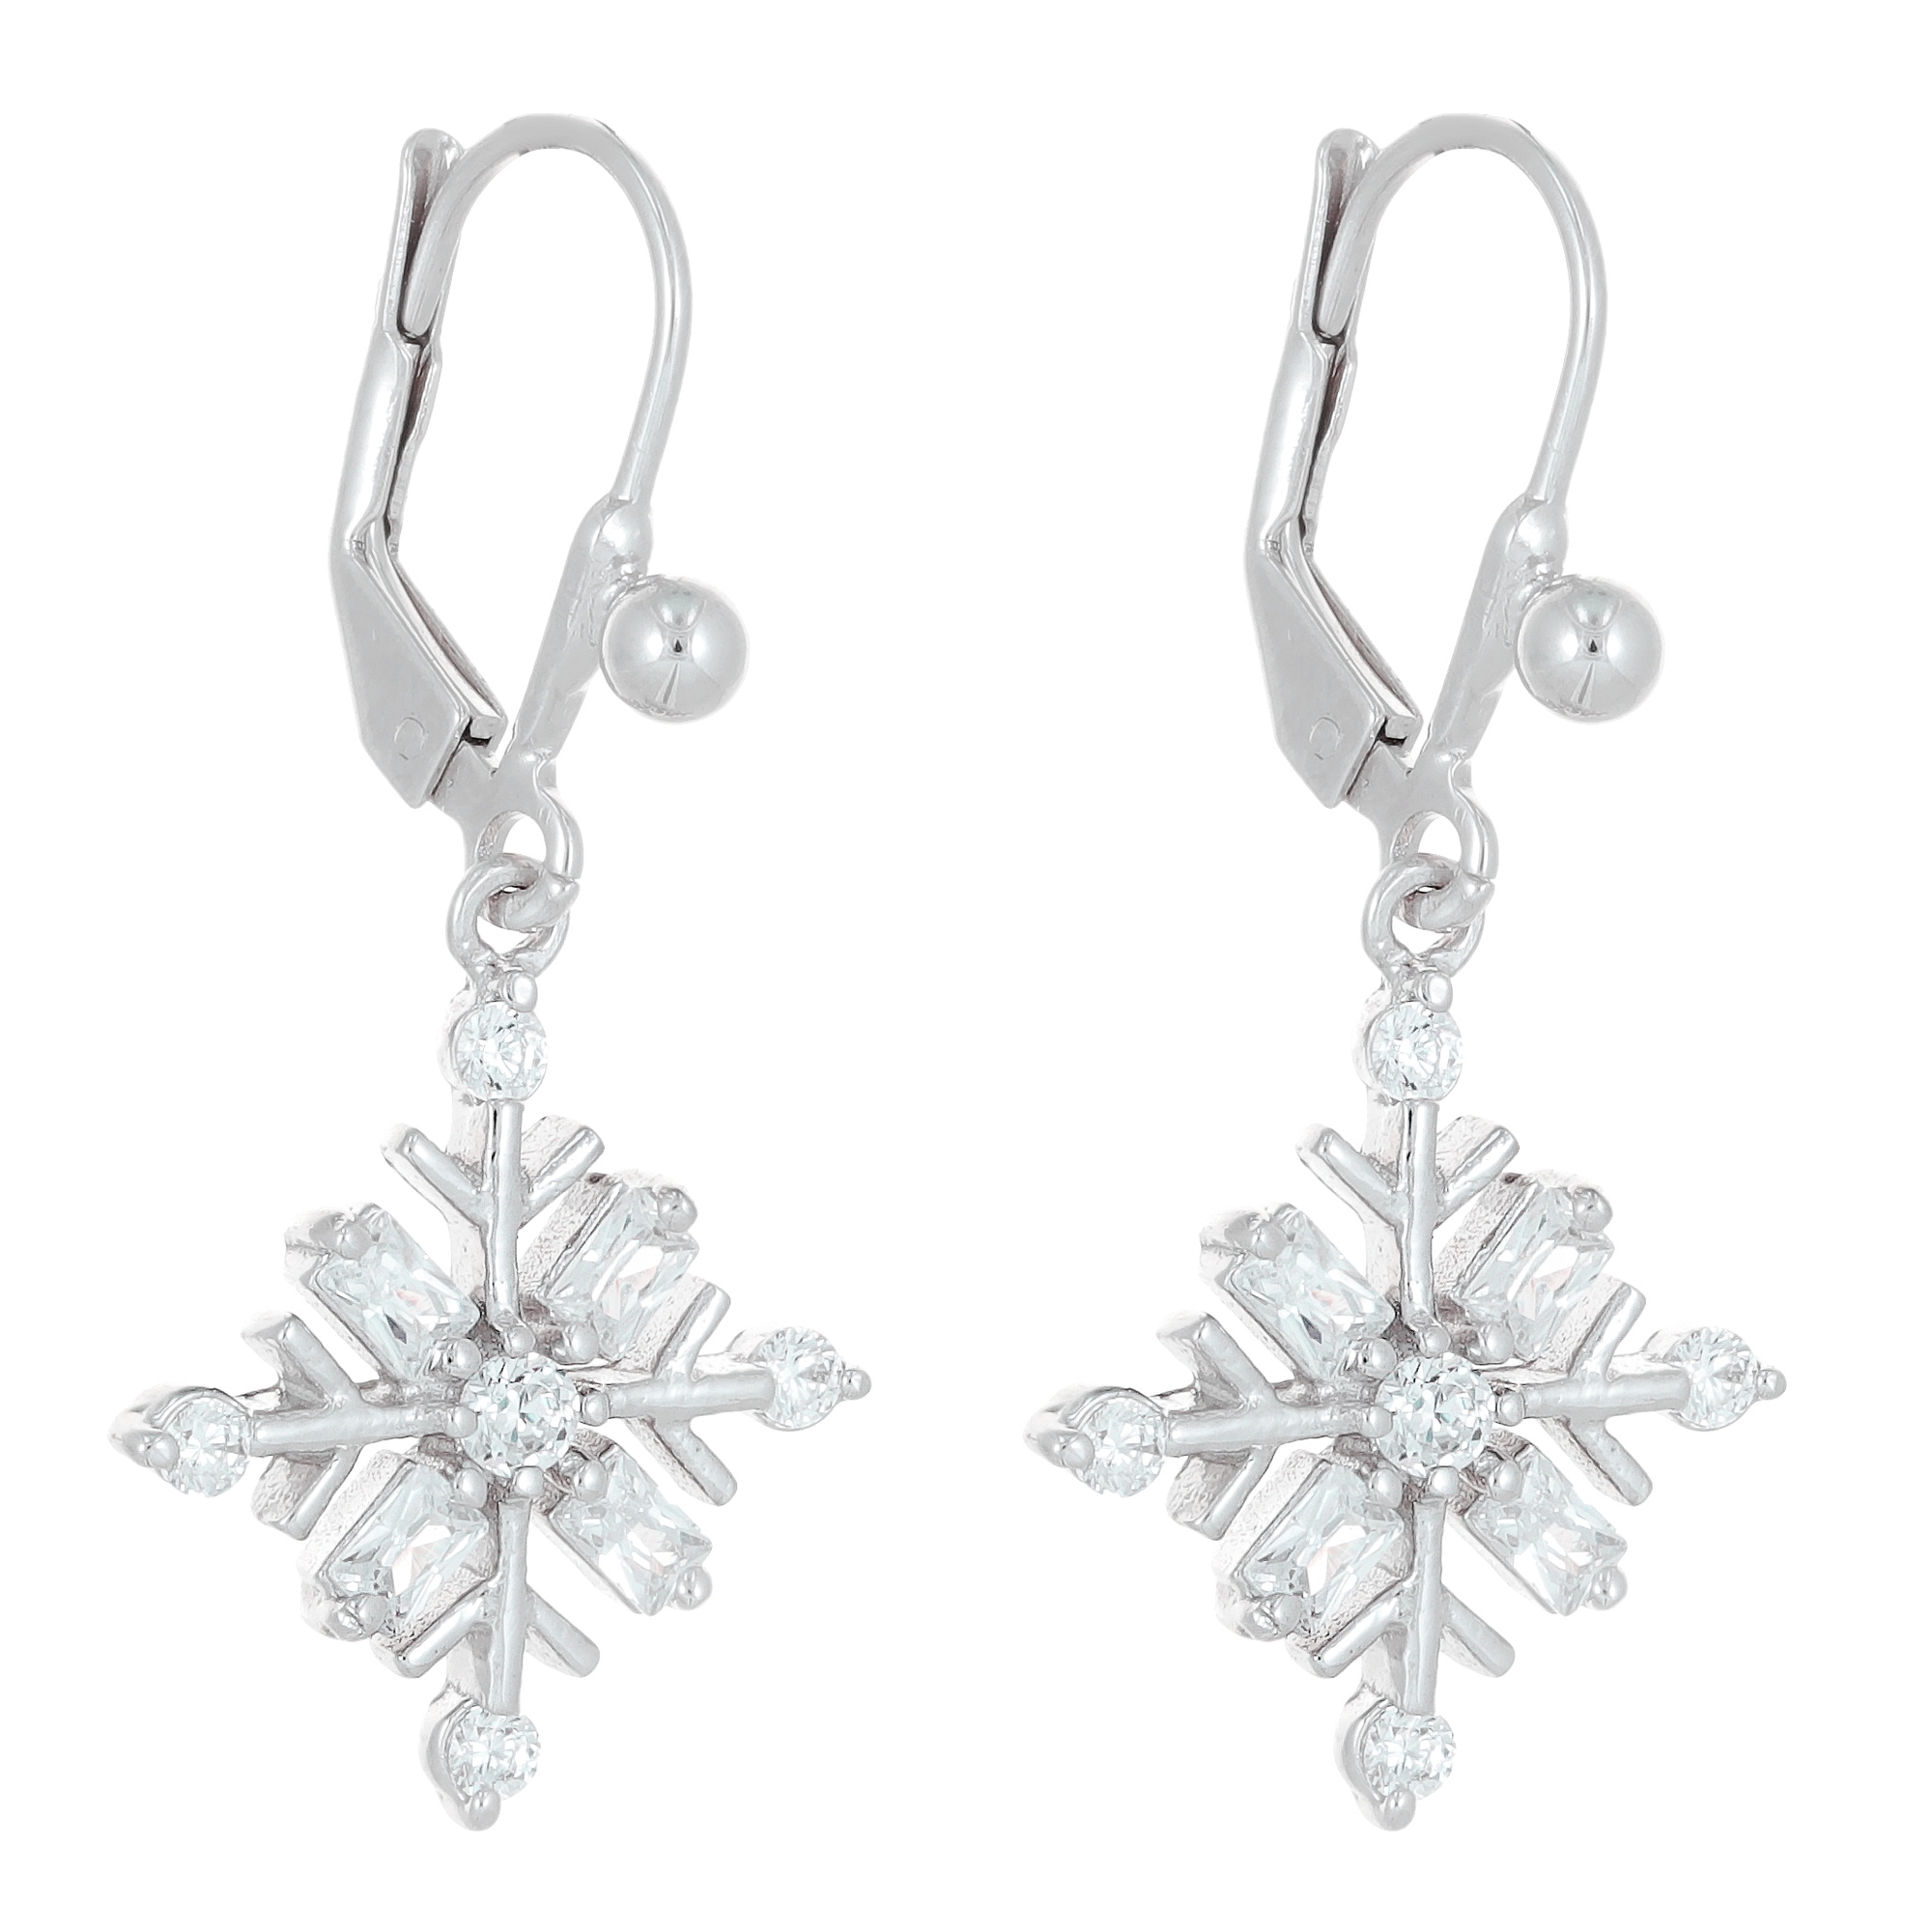 44616-earrings-earrings-sterling-silver-1.jpg